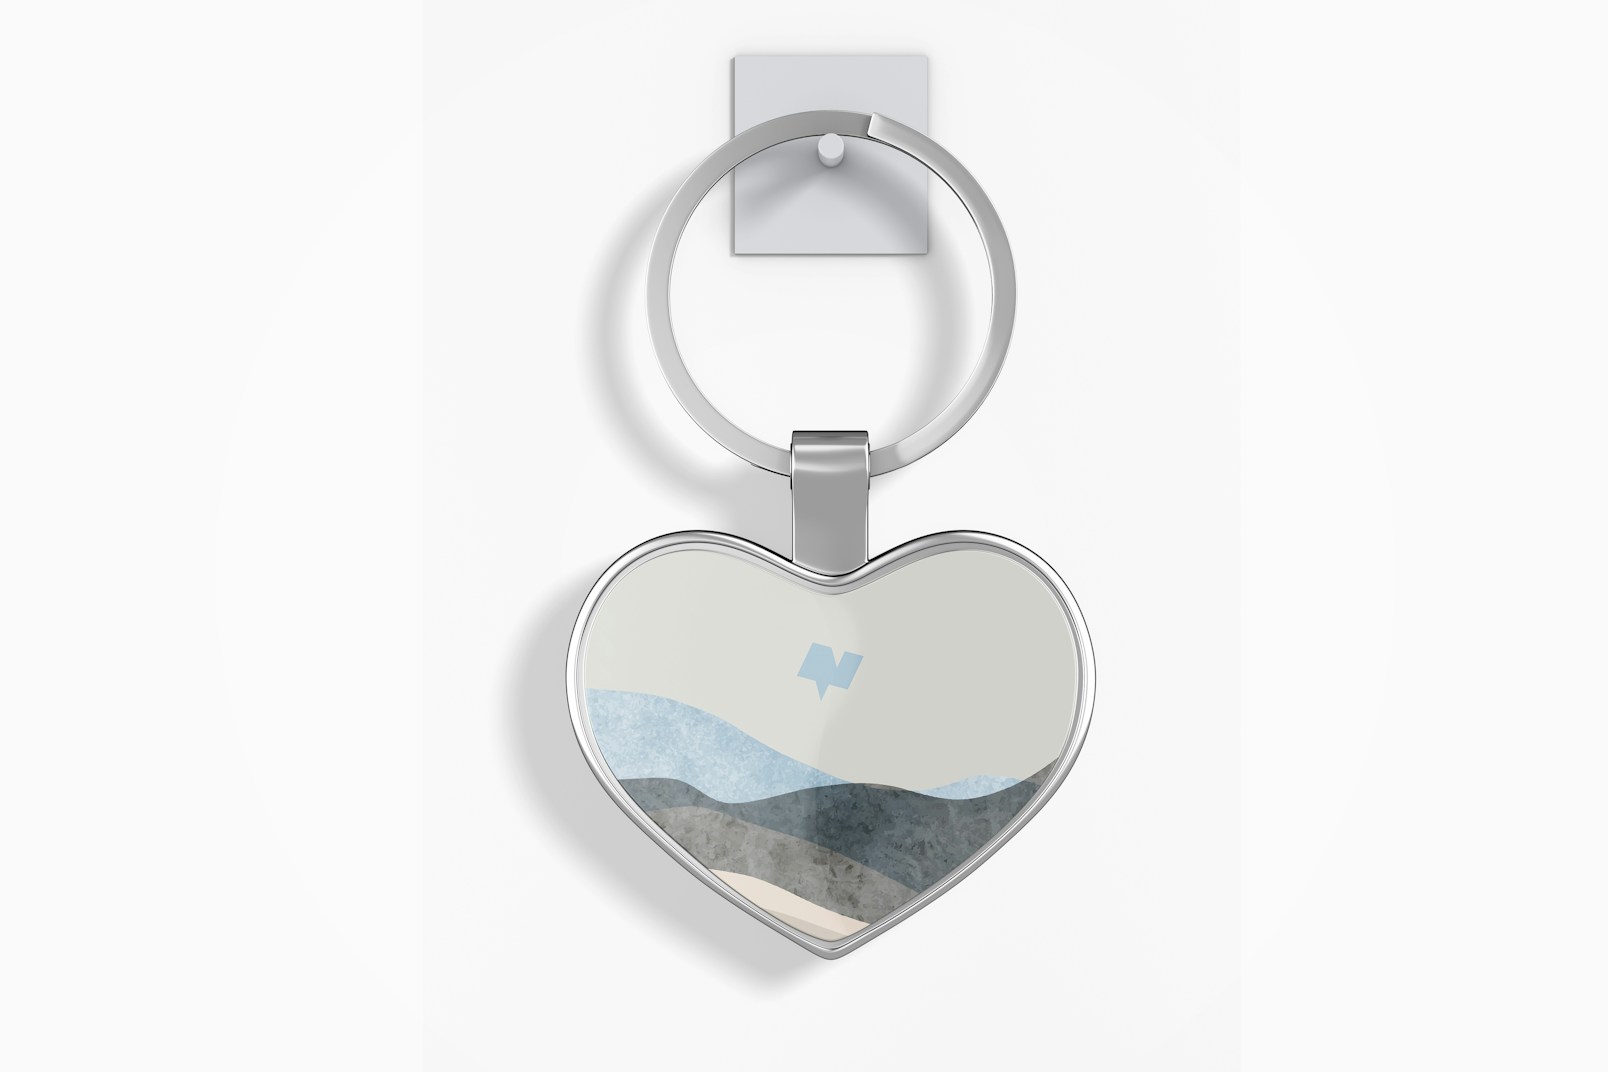 Metallic Heart Shaped Keychain Mockup, Hanging